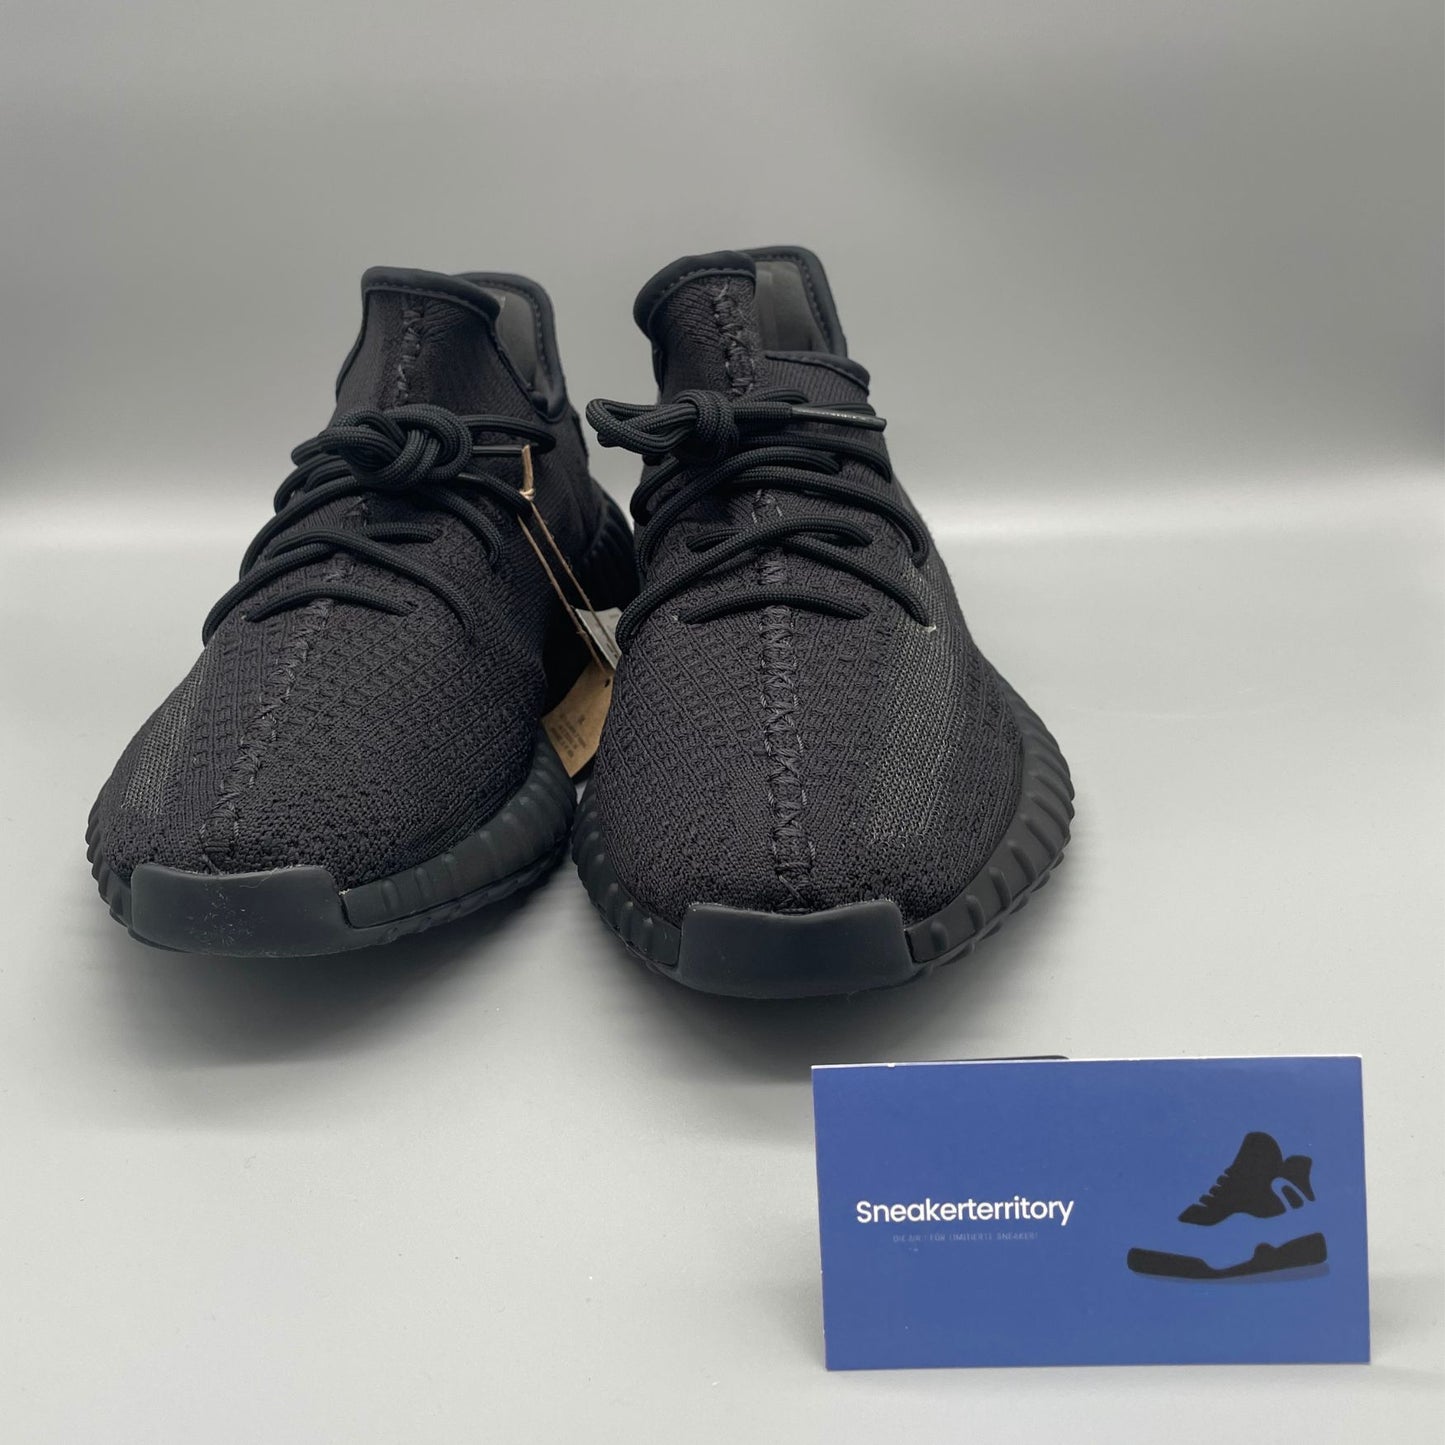 Adidas Yeezy Boost 350 V2 Onyx - Sneakerterritory; Sneaker Territory 5